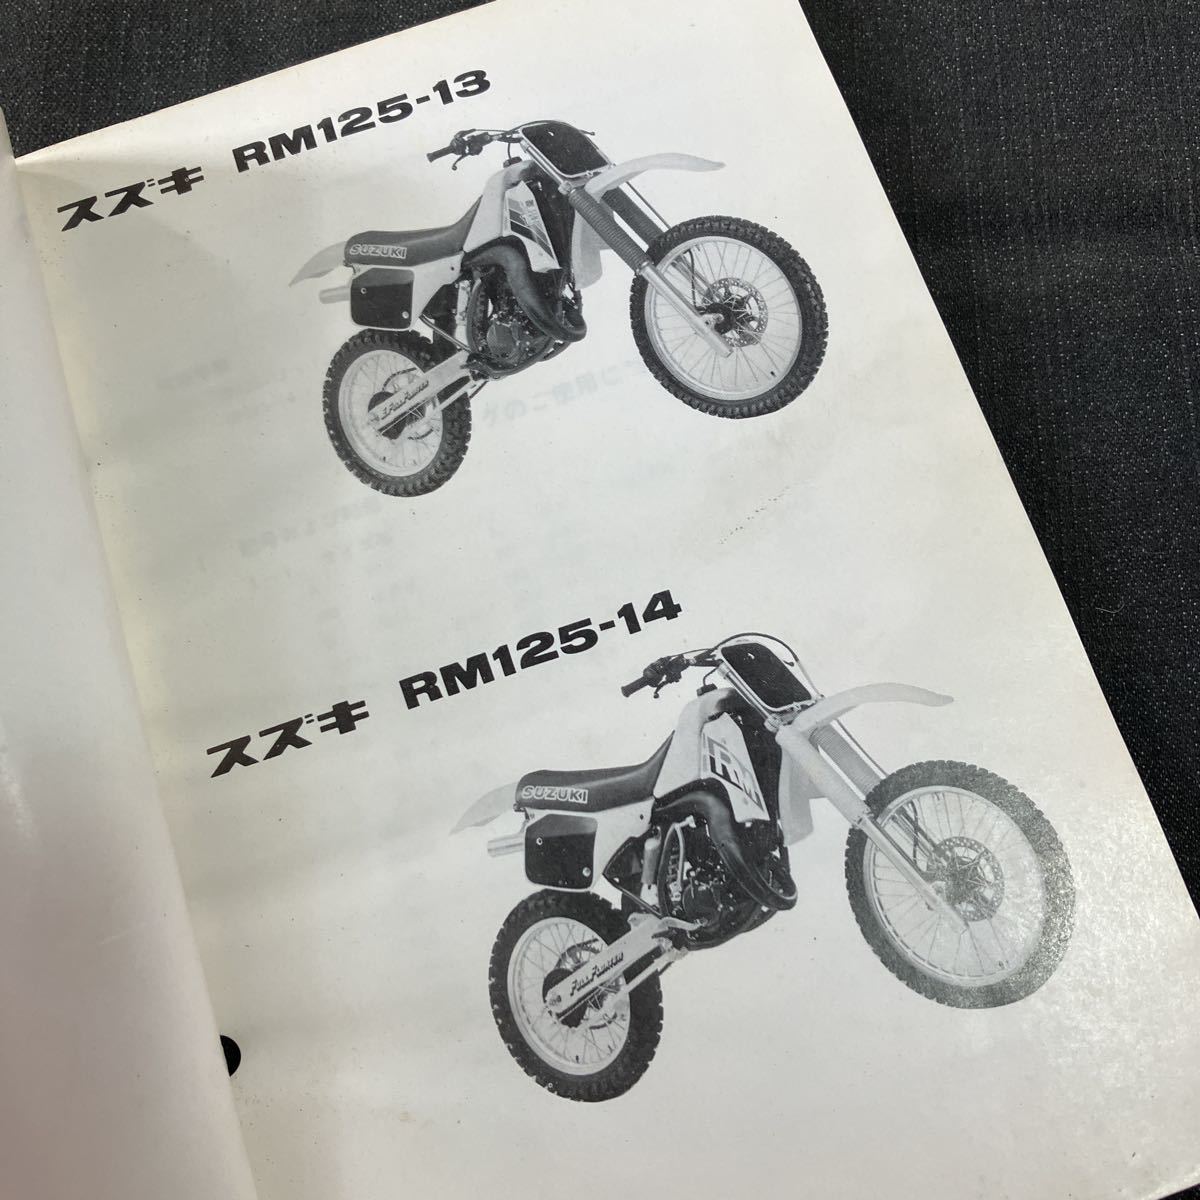 p060905 スズキ RM125 RF13A パーツカタログ 1986年10月 RM125-13 RM125-14の画像6